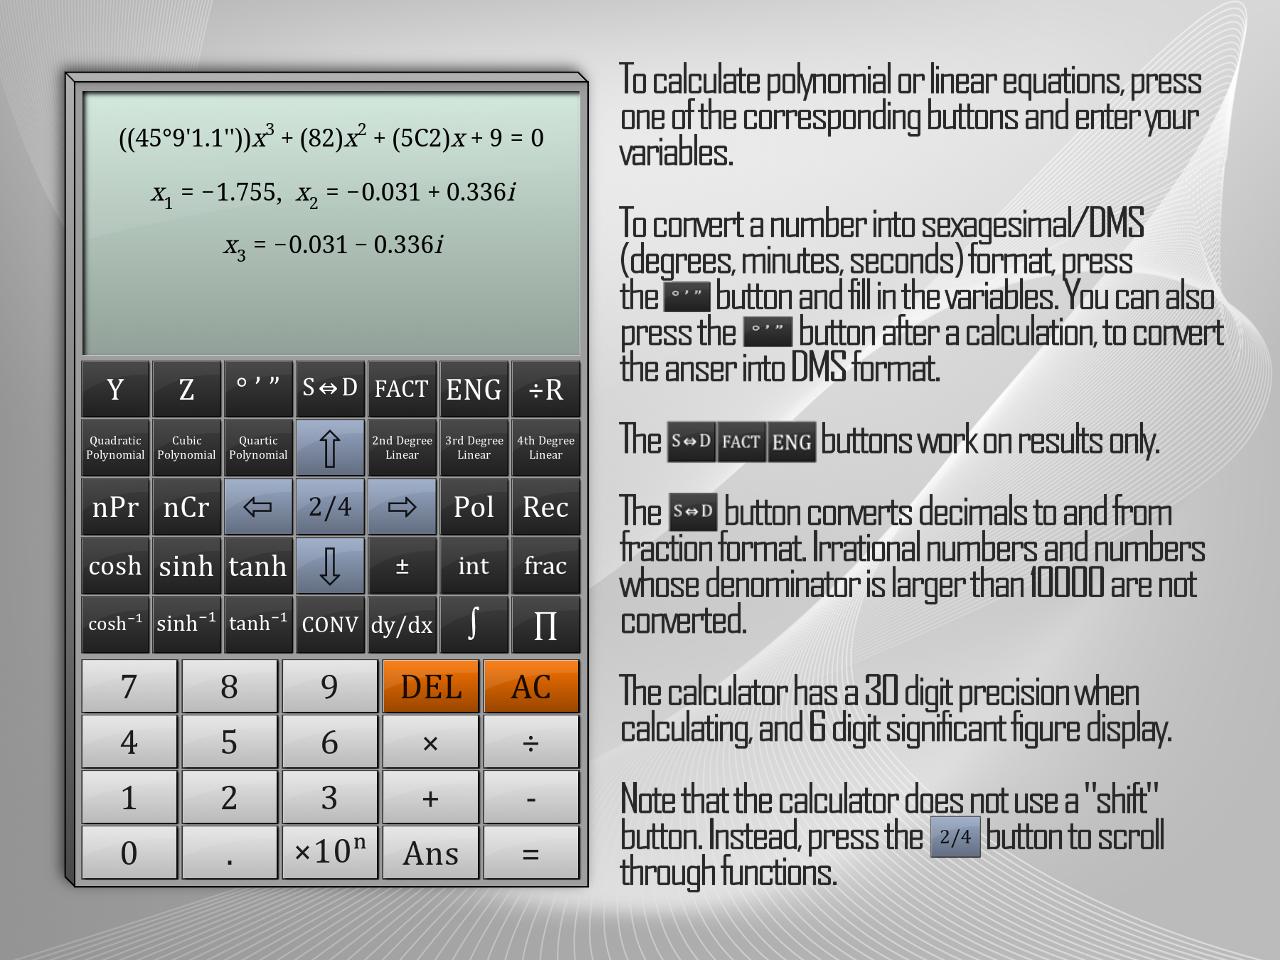 Full Scientific Calculator For Android Apk Download